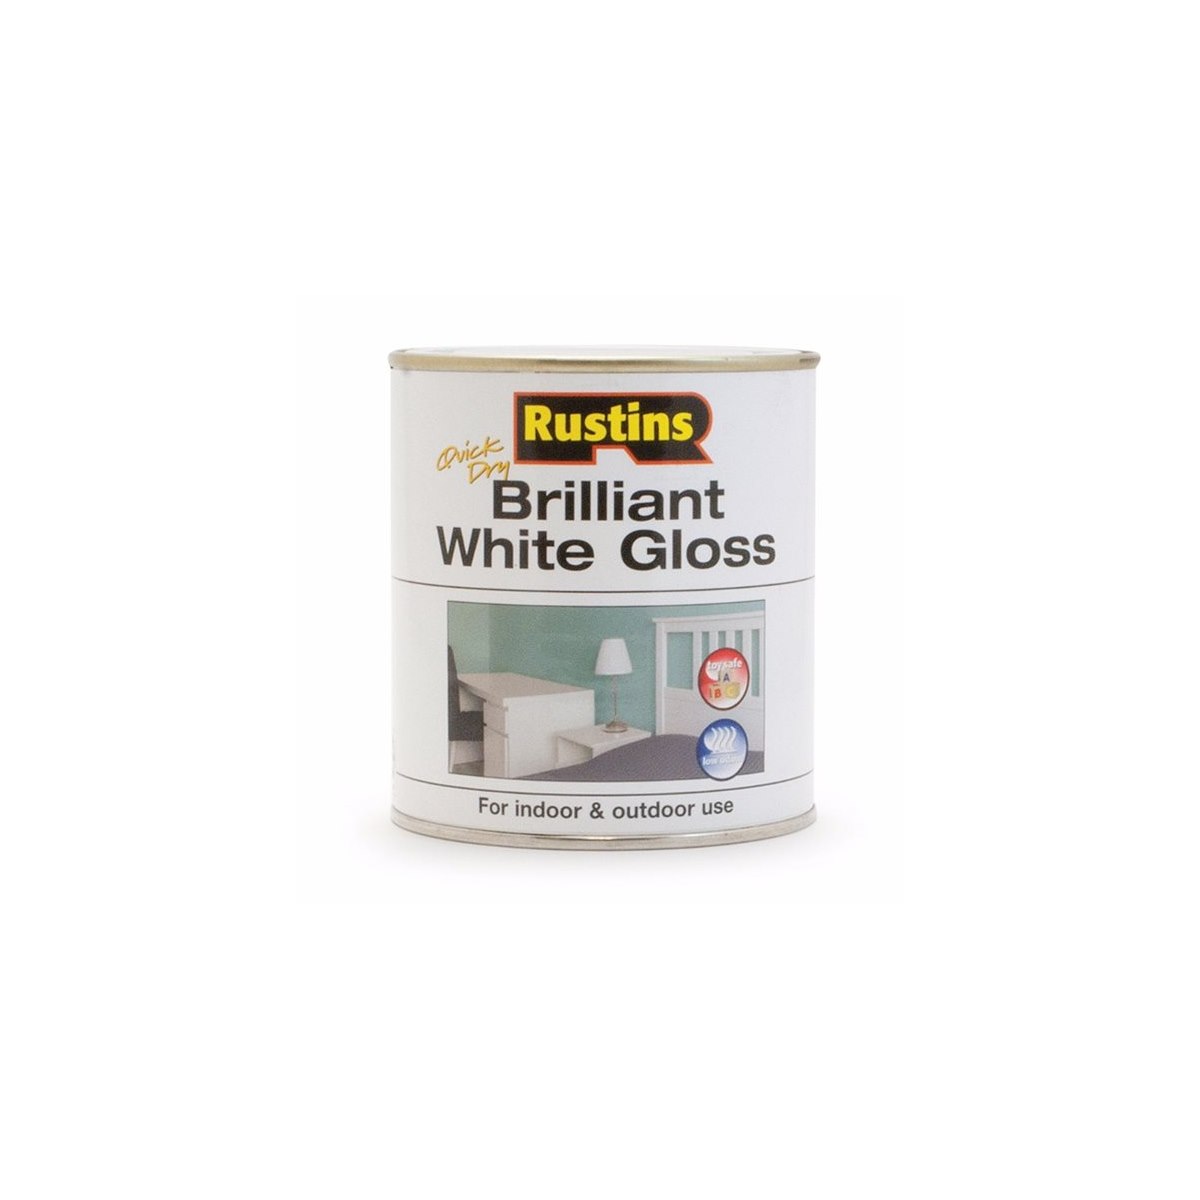 Rustins Quick Dry White Gloss Paint 500ml